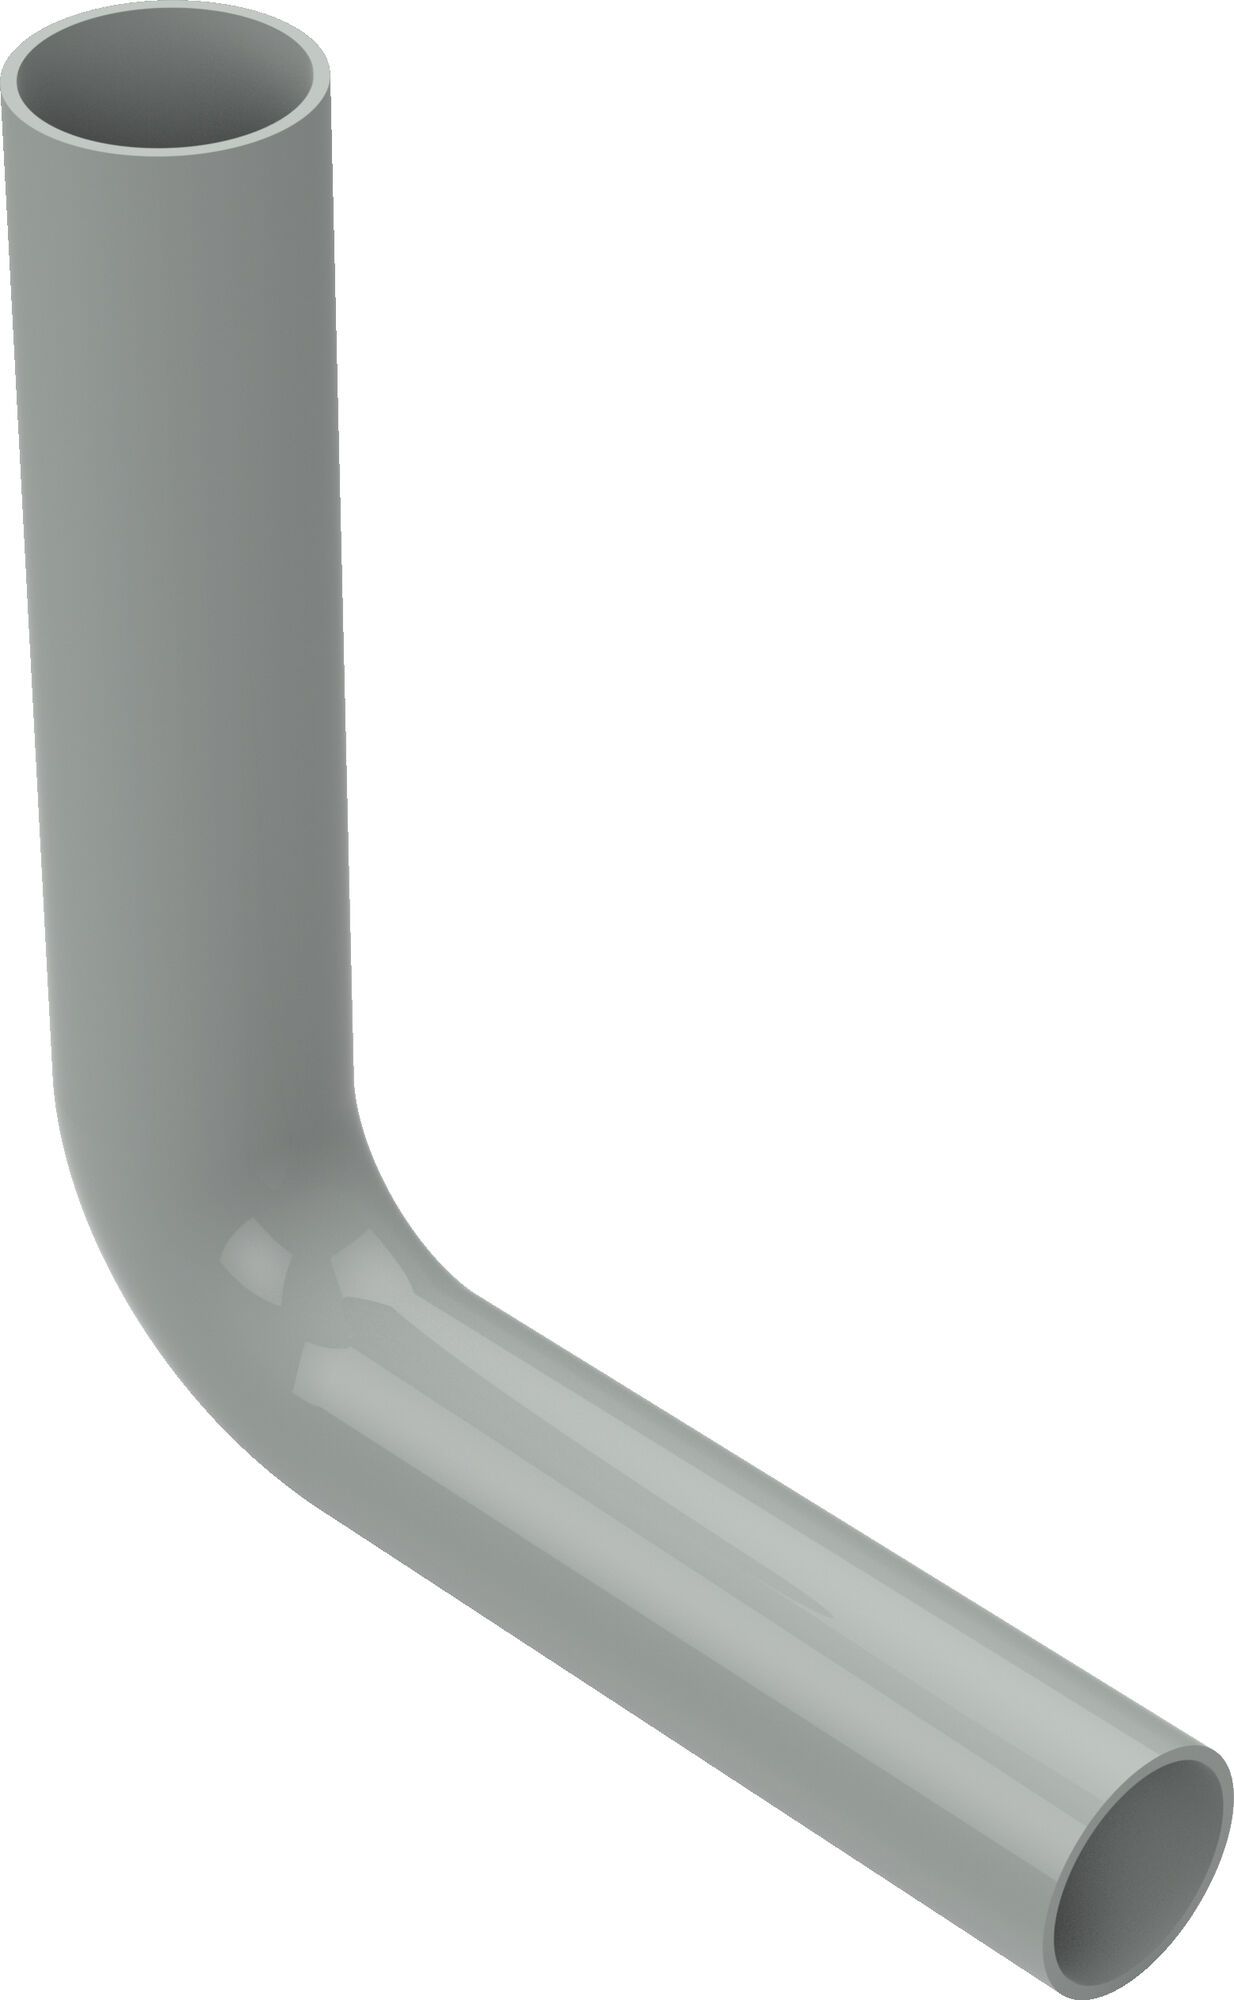 Flush pipe elbow, 230 x 210 mm, manhattan
